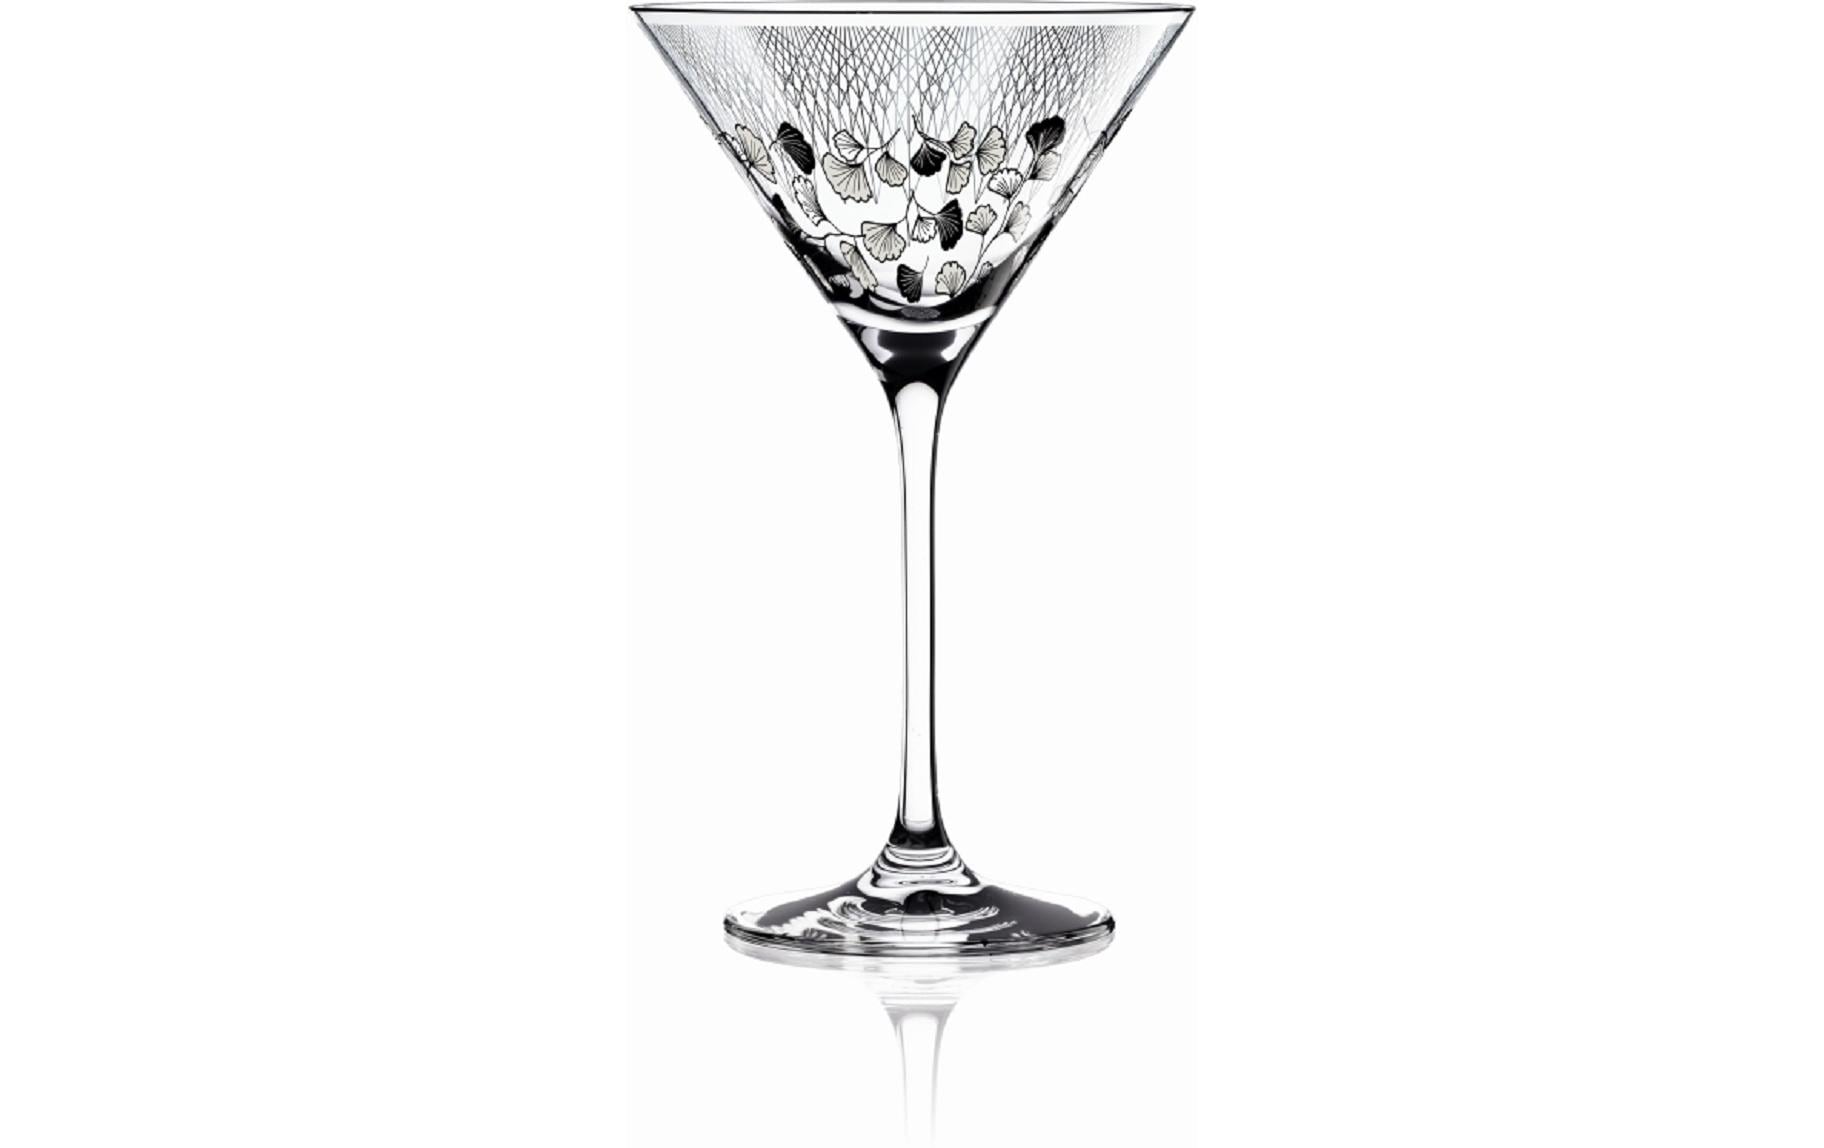 Ritzenhoff Martiniglas Leaves – Selli Cordazzi 225 ml, 1 Stück